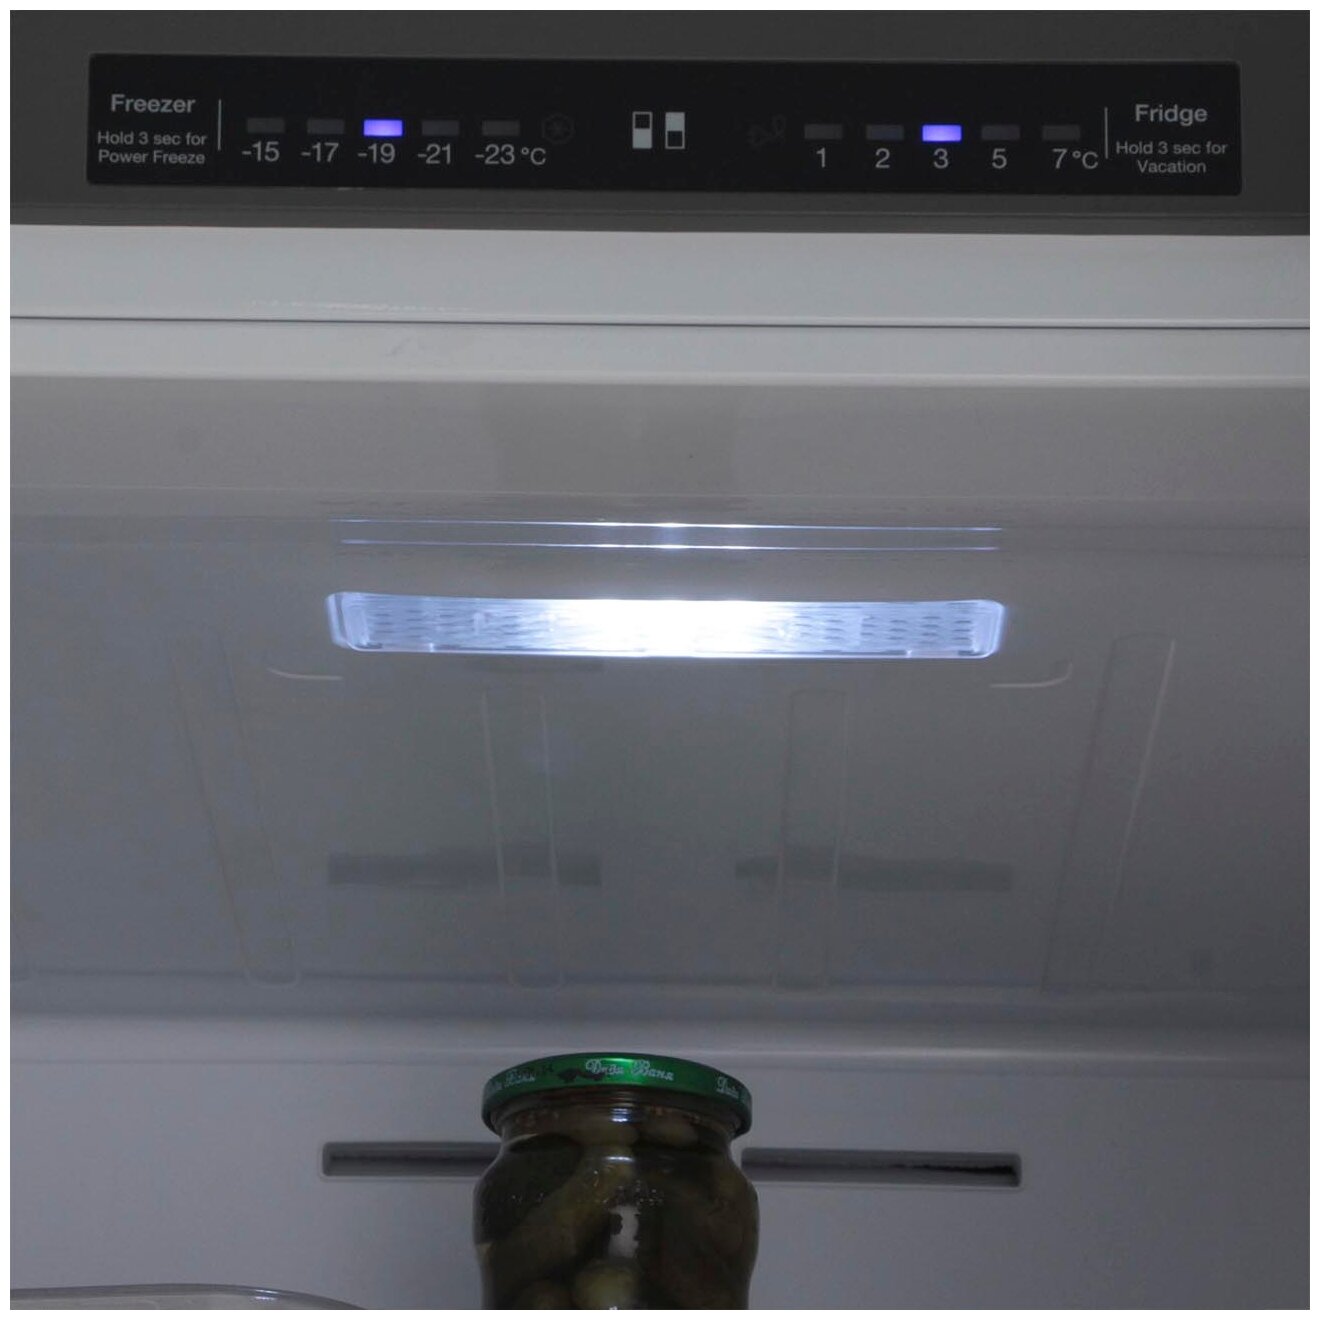 Холодильник Samsung RB37A5000/WT